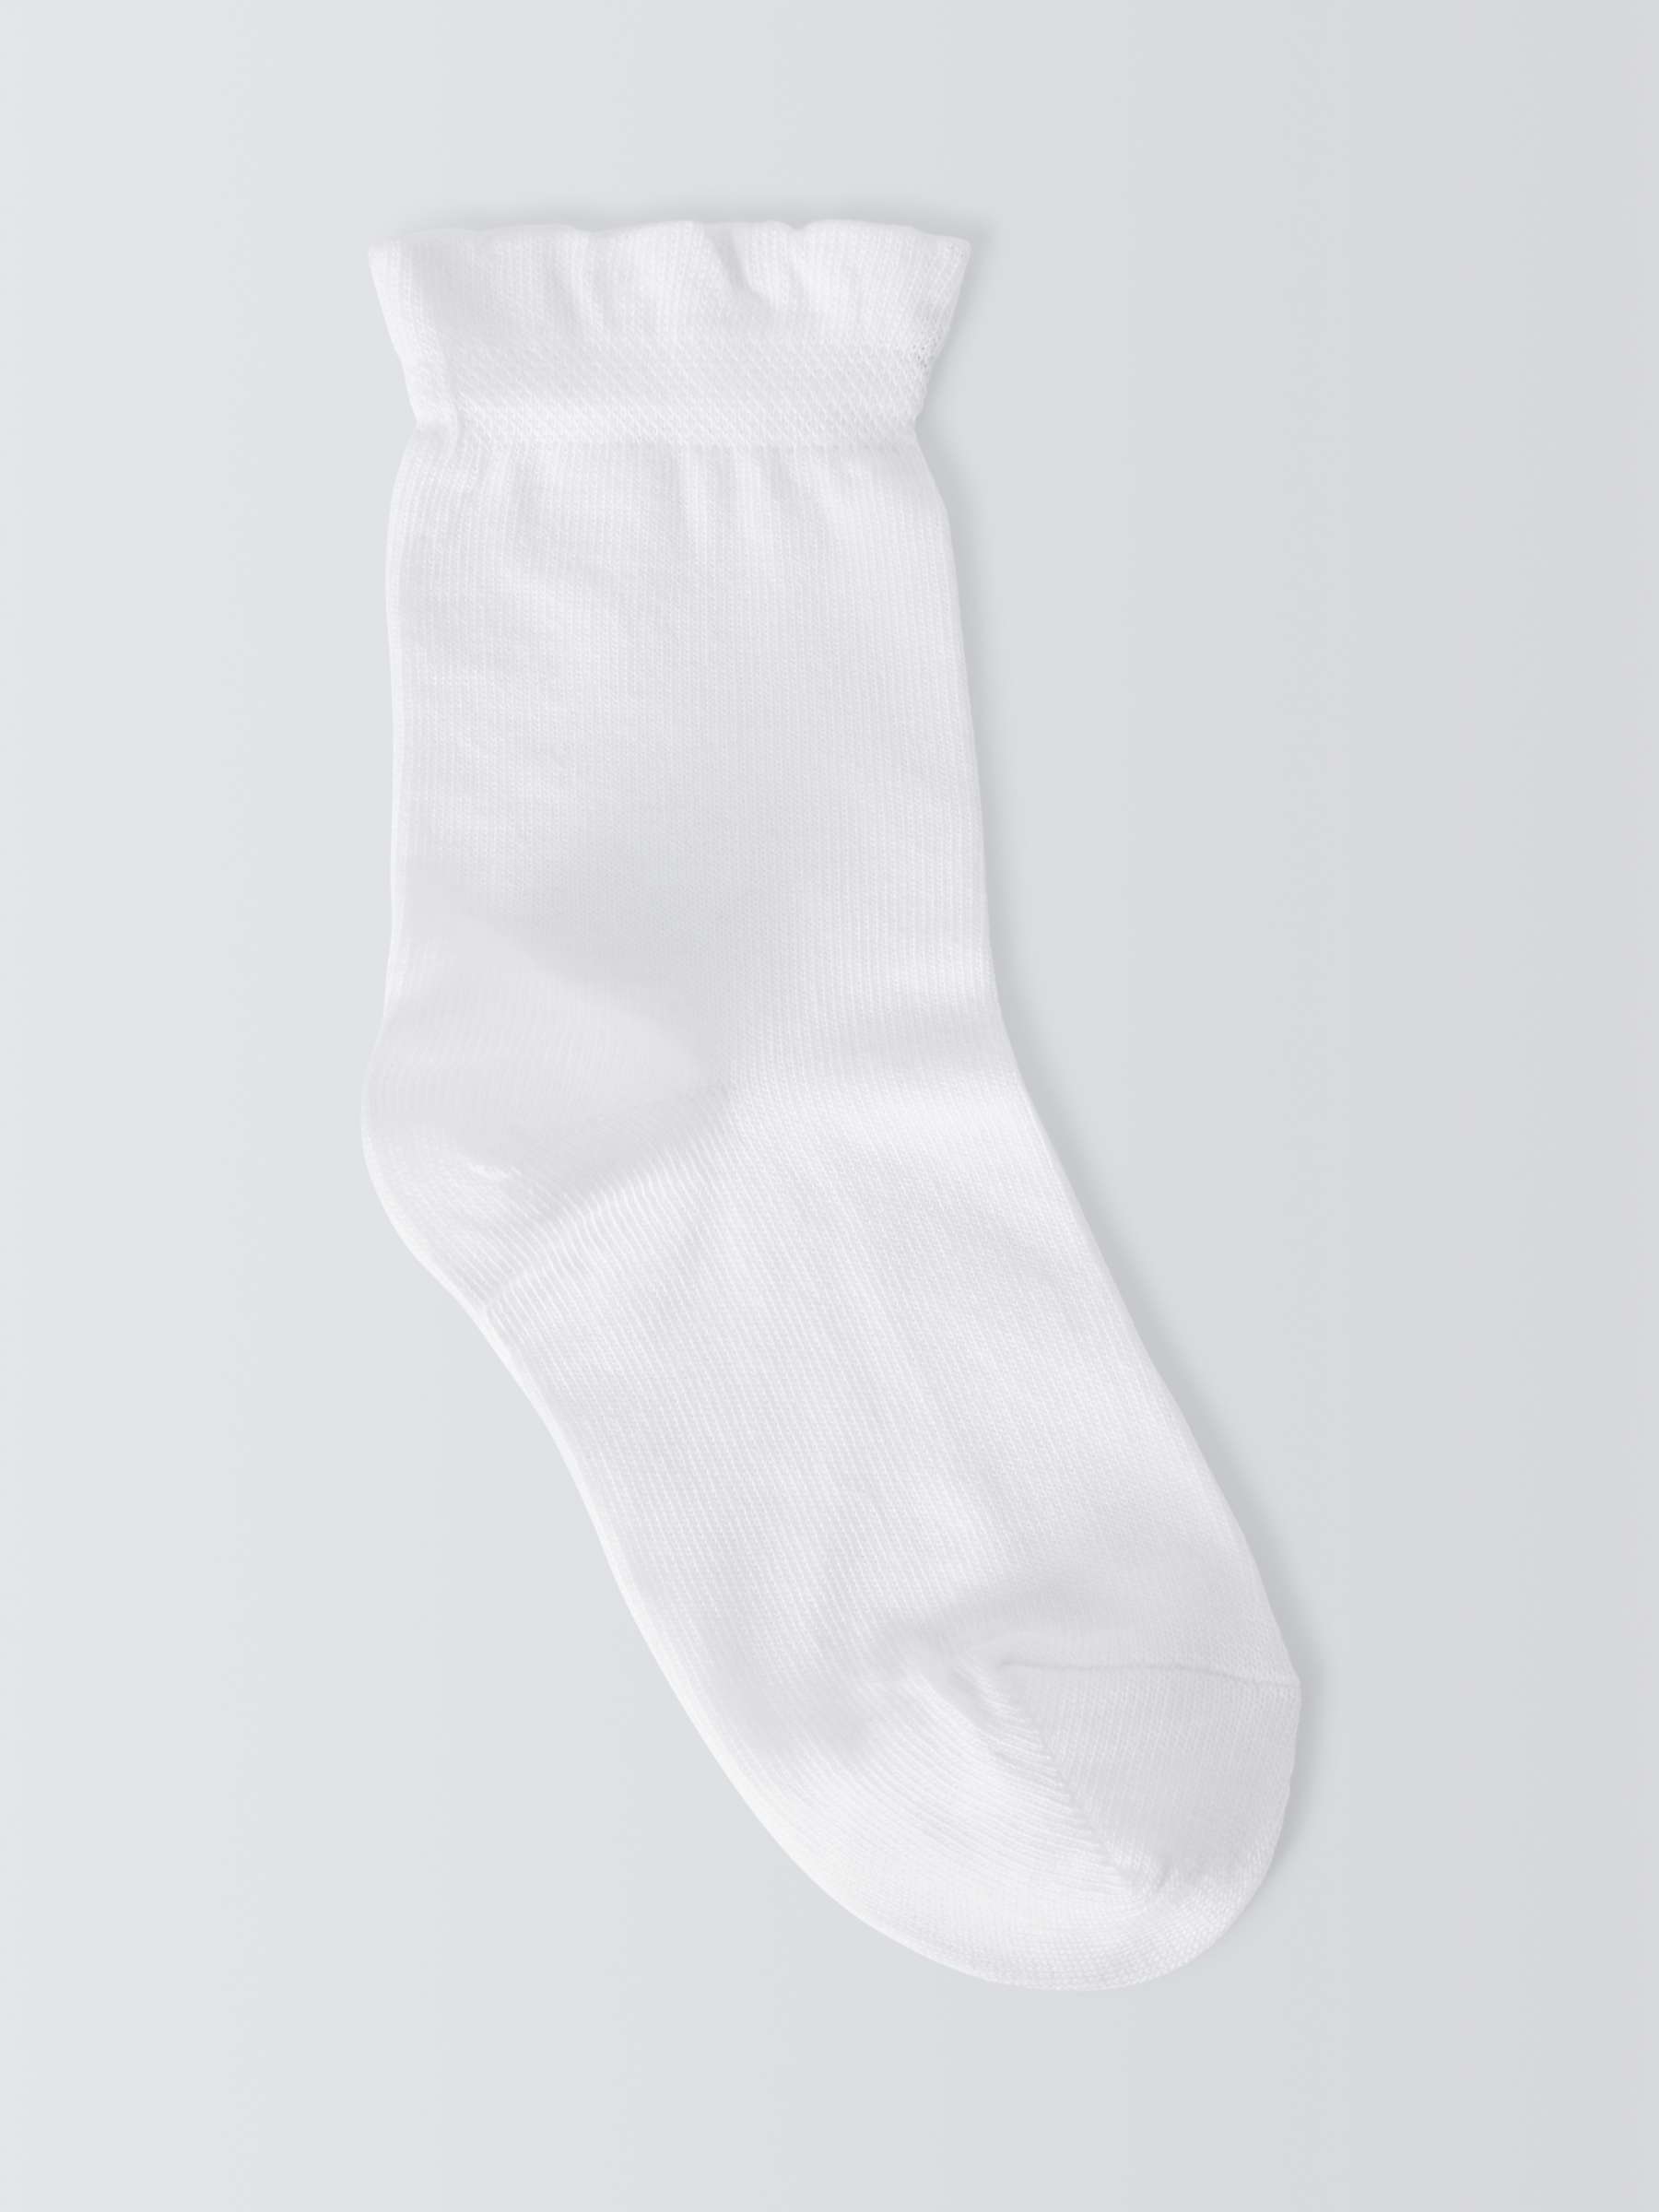 Buy John Lewis Kids' Frill Top Socks, Pack of 5, White Online at johnlewis.com